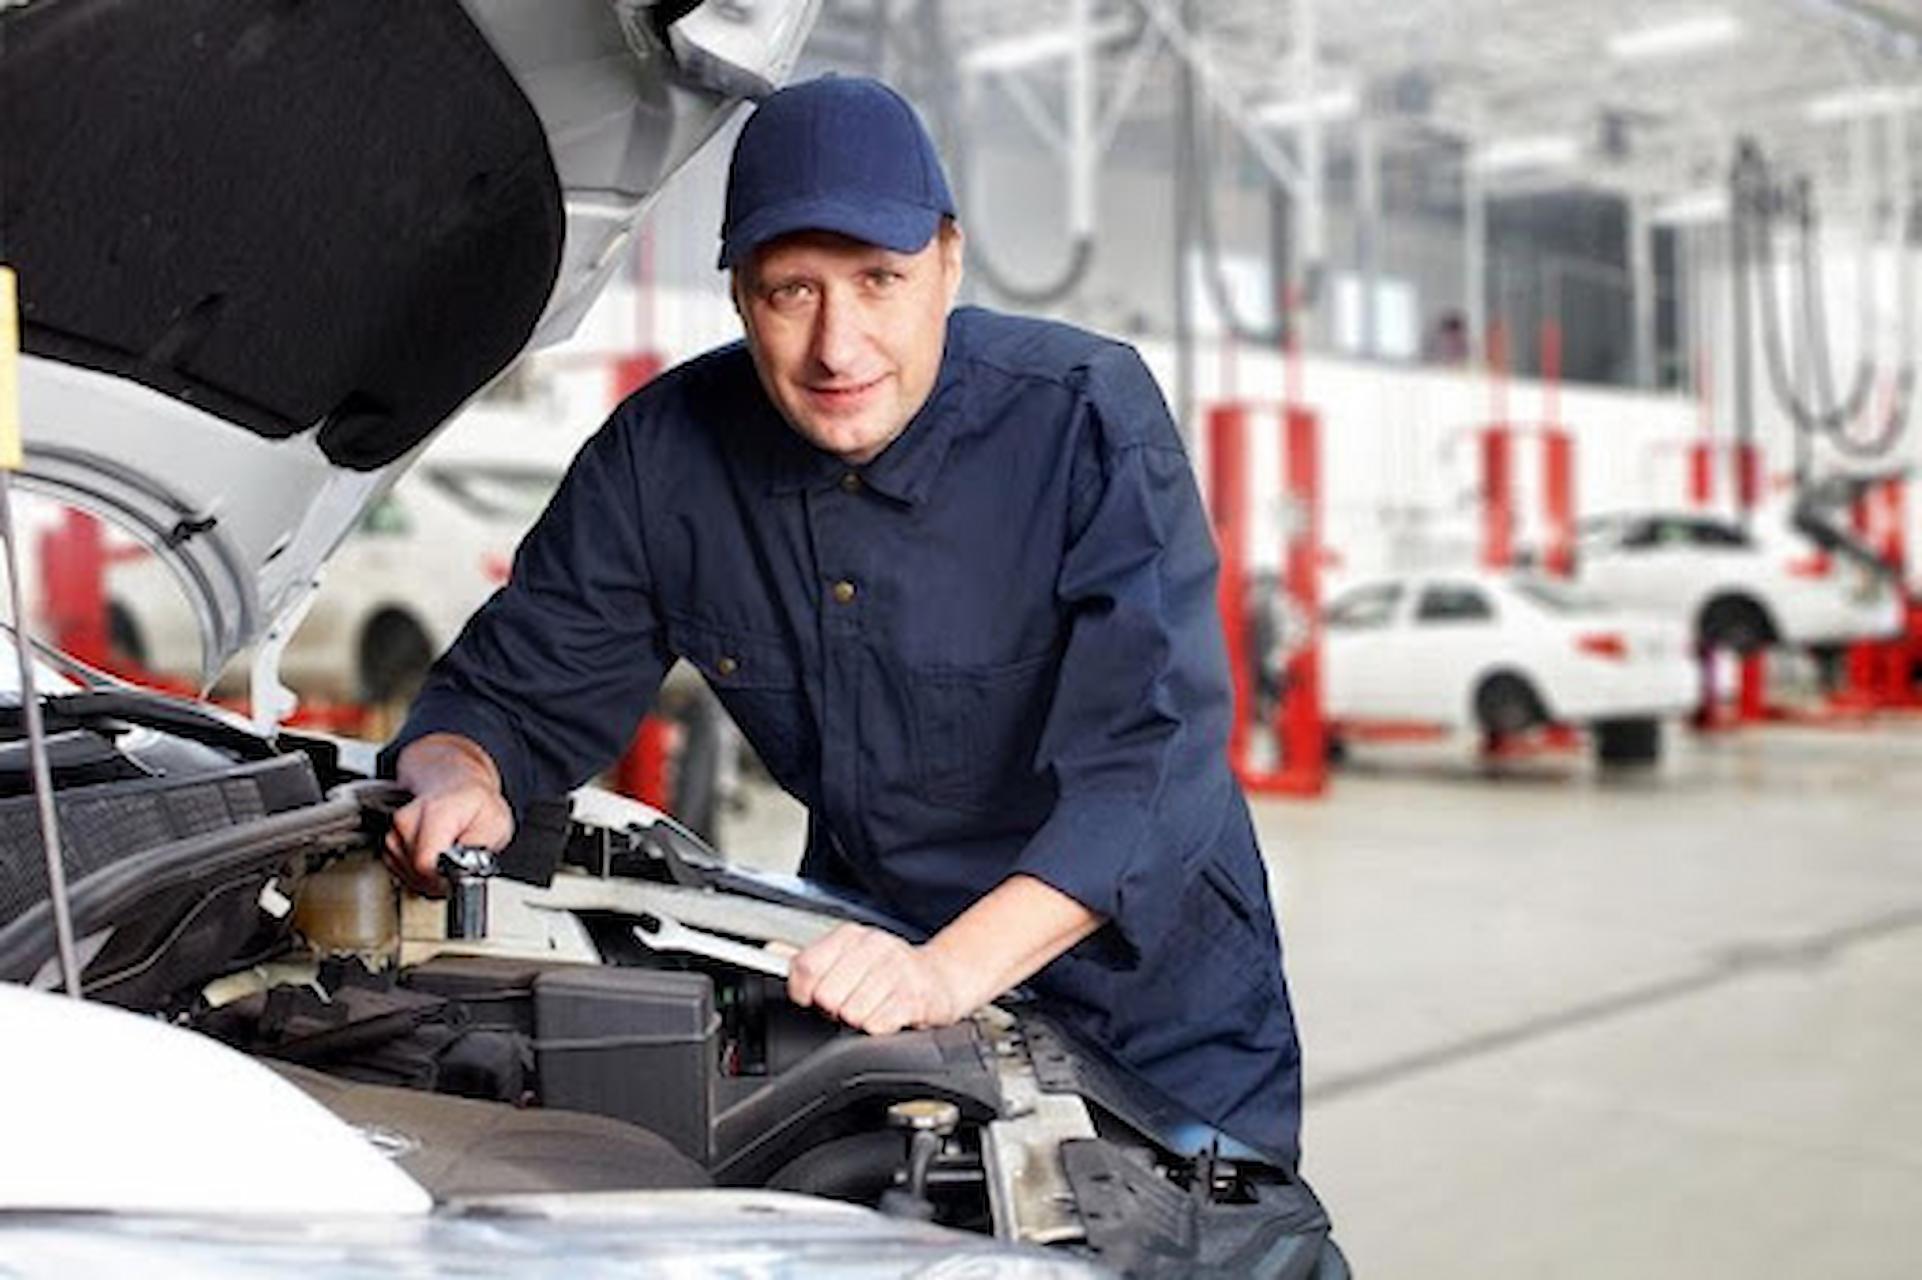 Receive Professional Car Care With Regular Honda Service